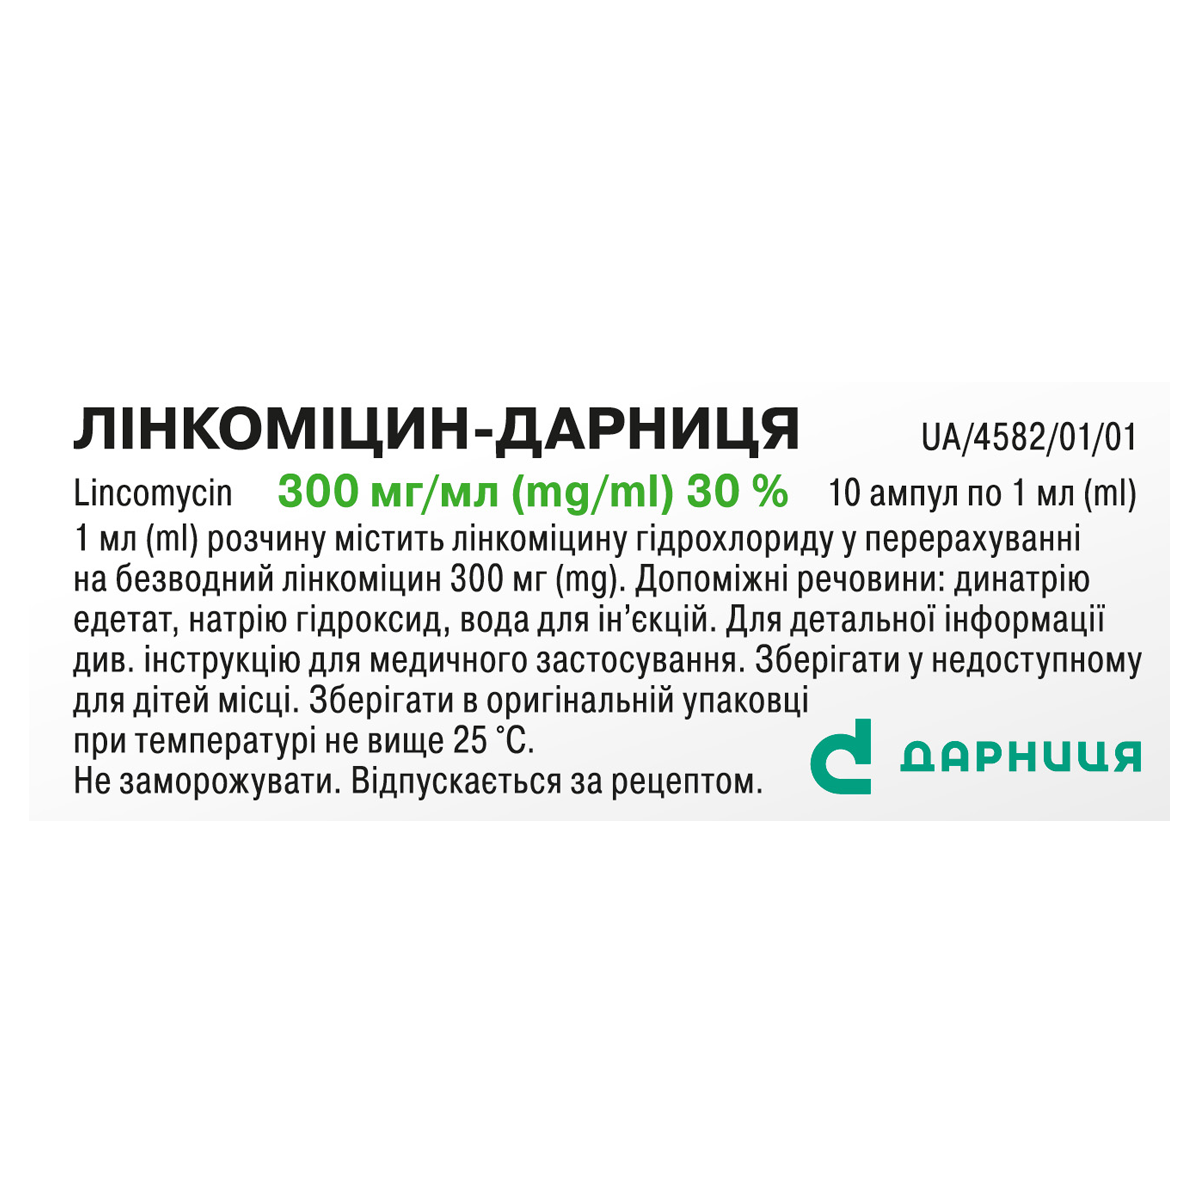 Lincomycin-Darnitsa manufacturer "Darnytsia" pharmaceutical company